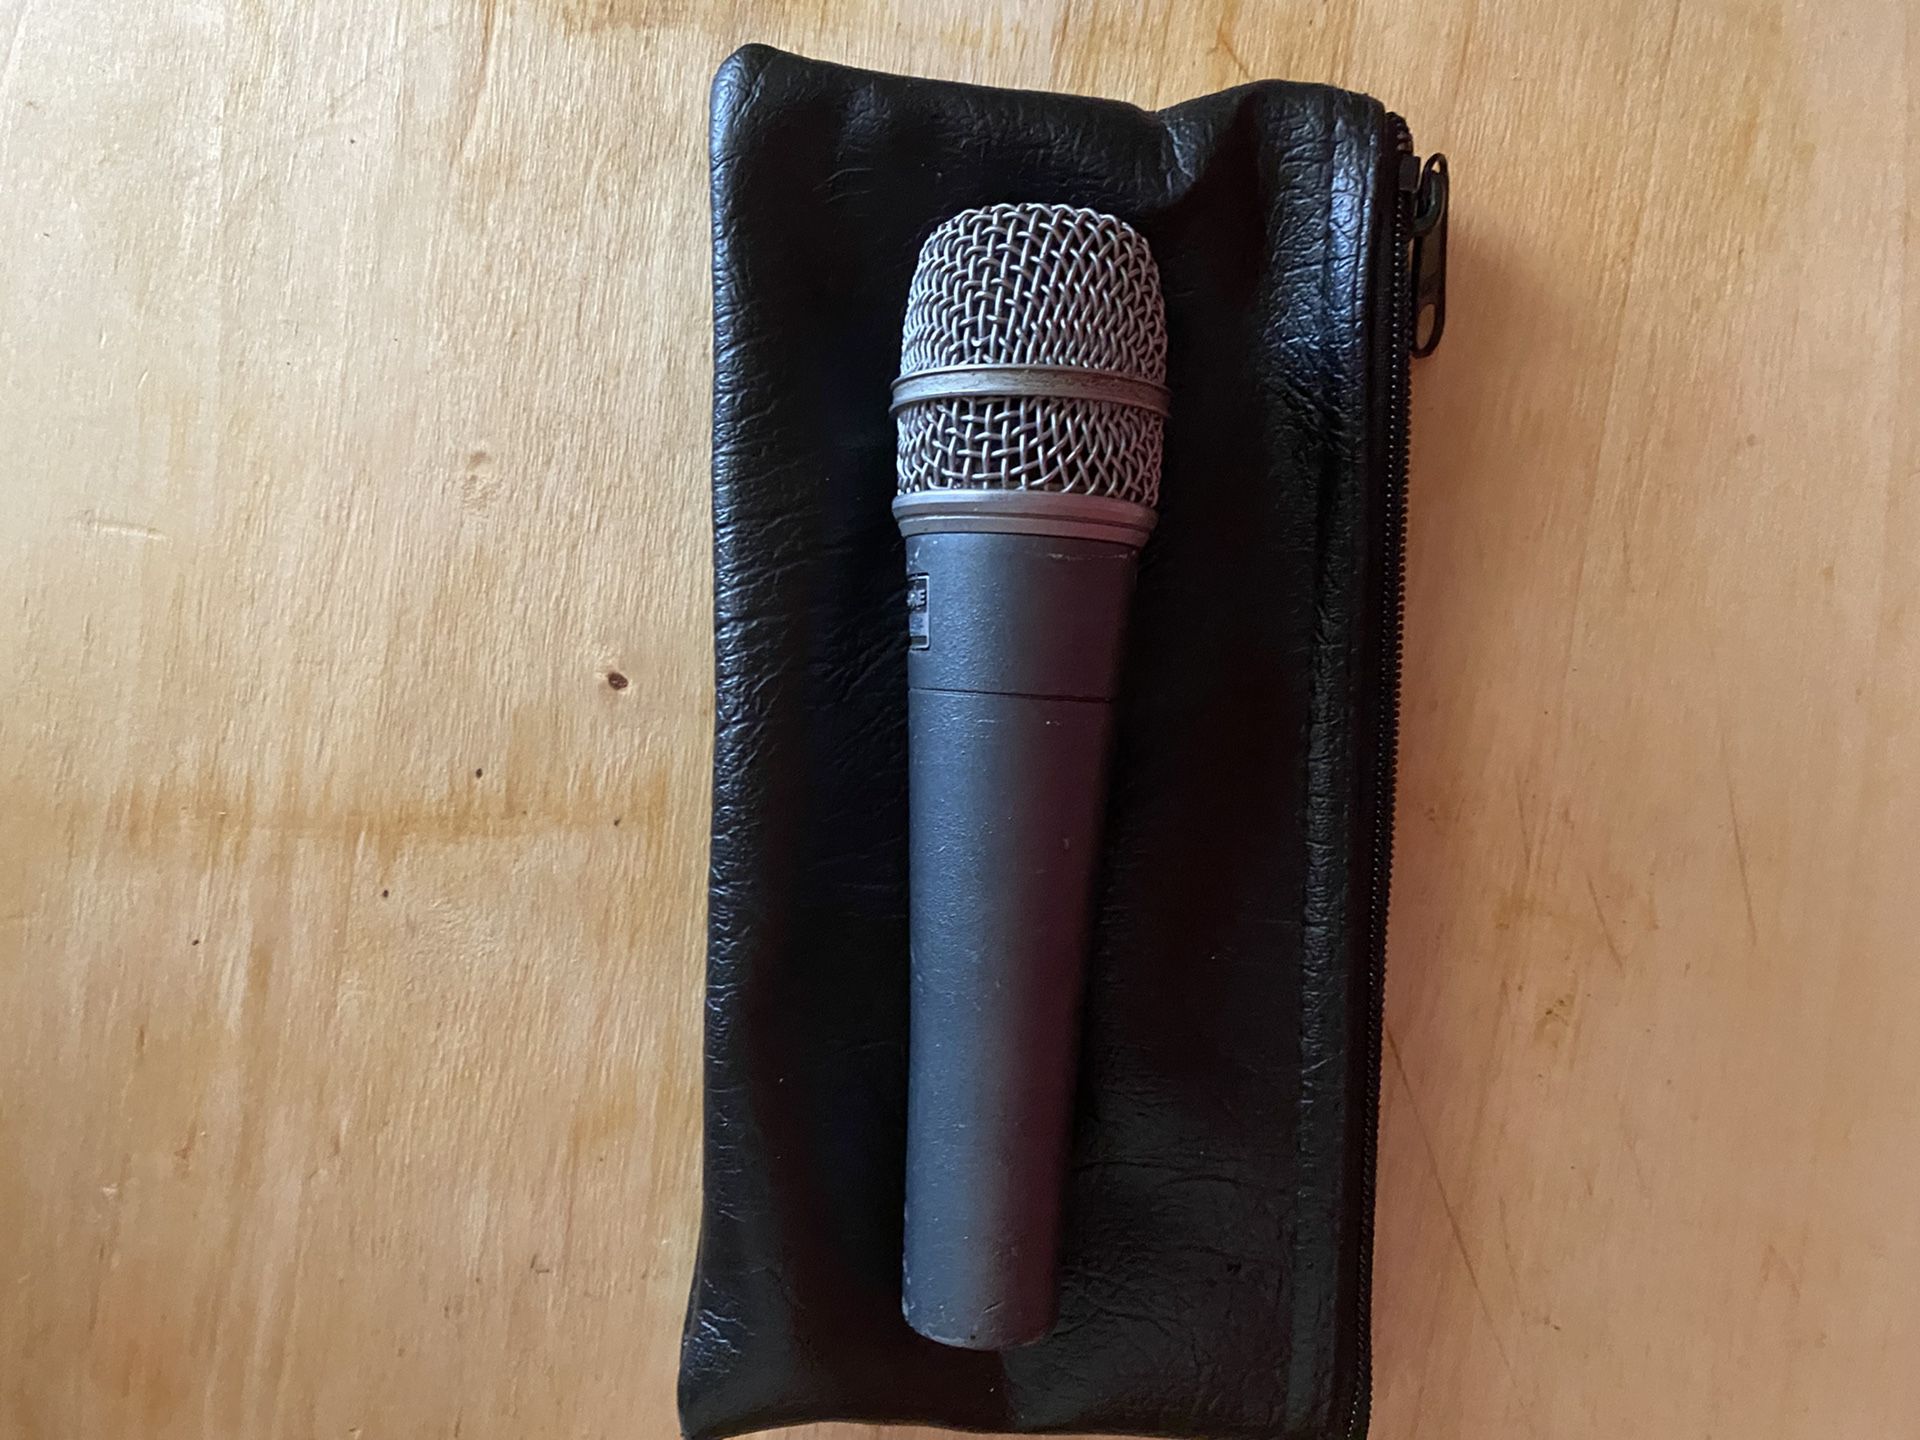 SHURE Beta 57A microphone